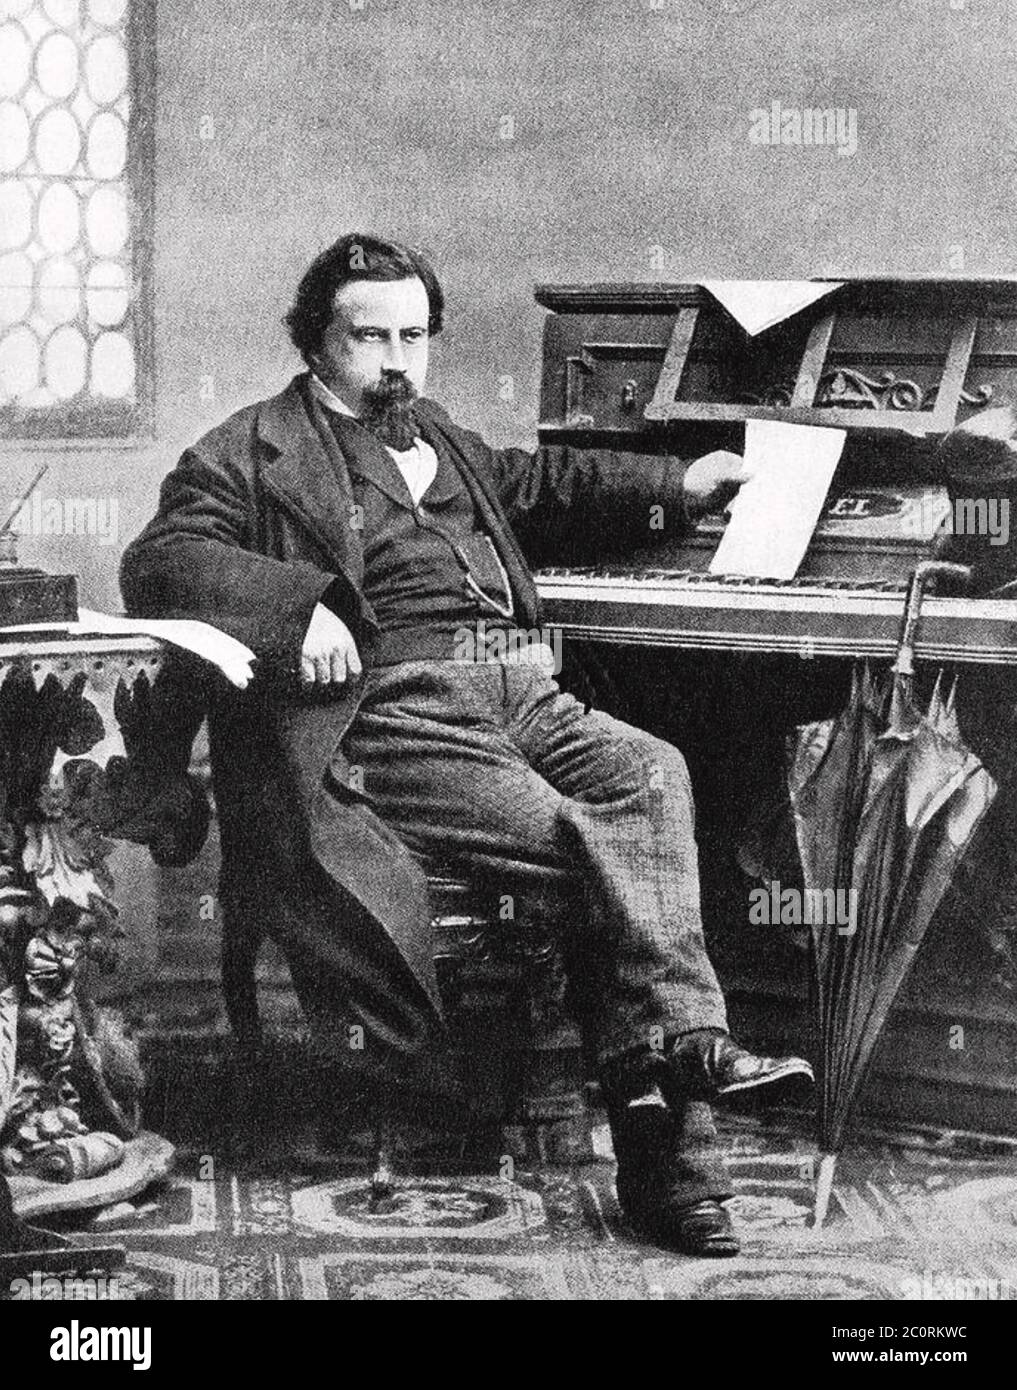 AMILCARE PONCHIELLI (1834-1886) Italienischer Opernkomponist Stockfoto